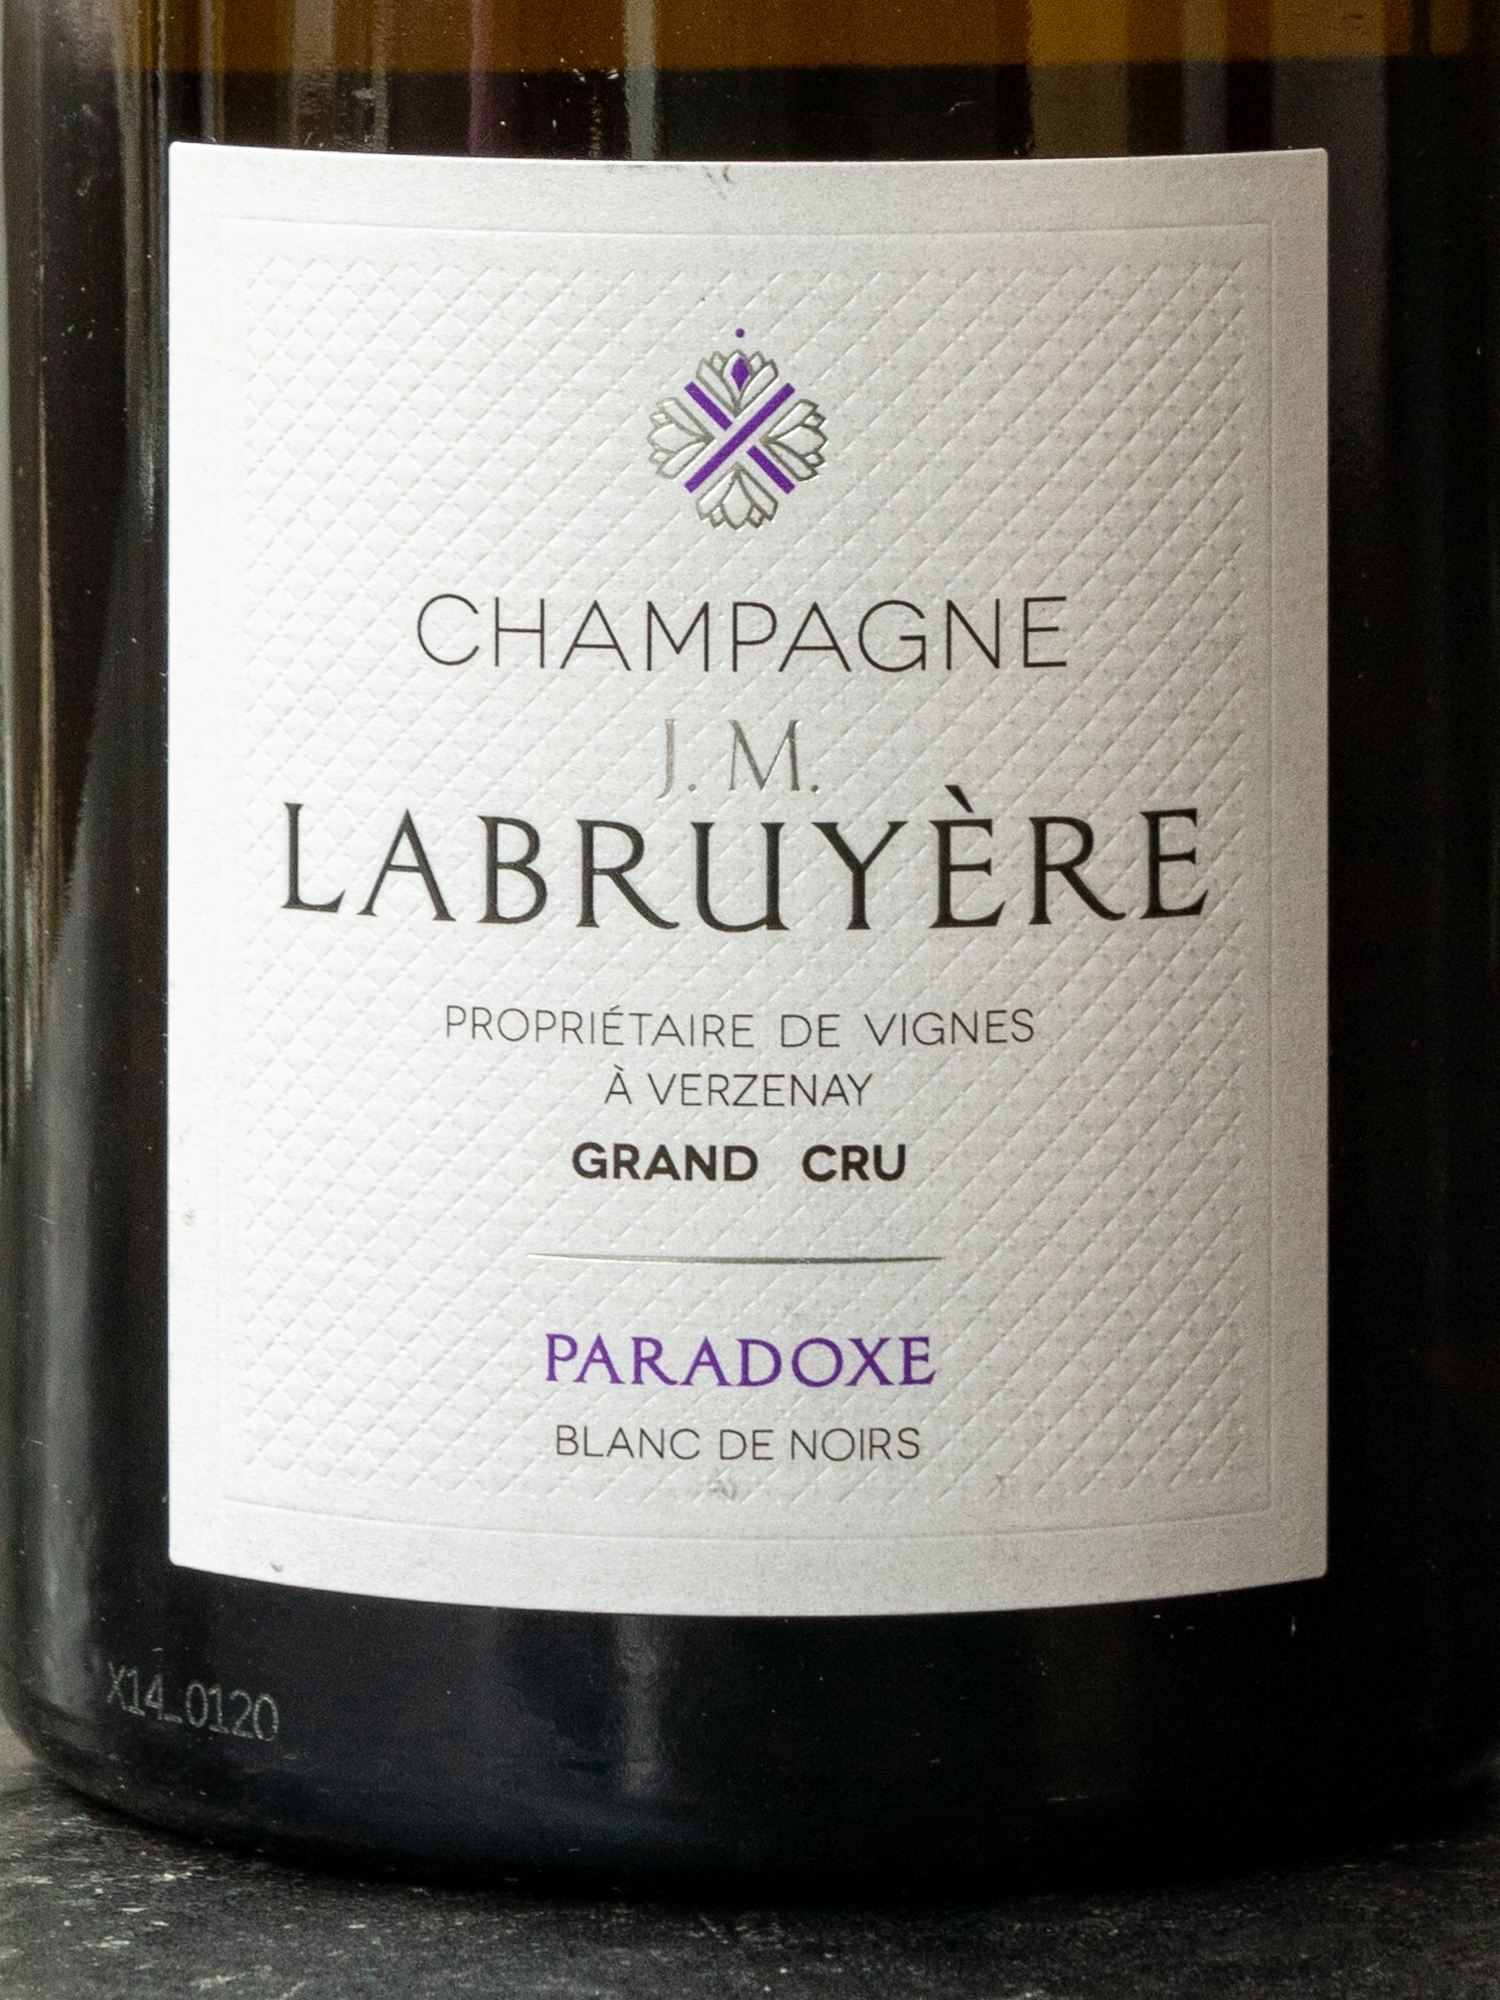 Этикетка J.M. Labruyere Champagne Grand Cru Paradoxe Blanc de Noirs